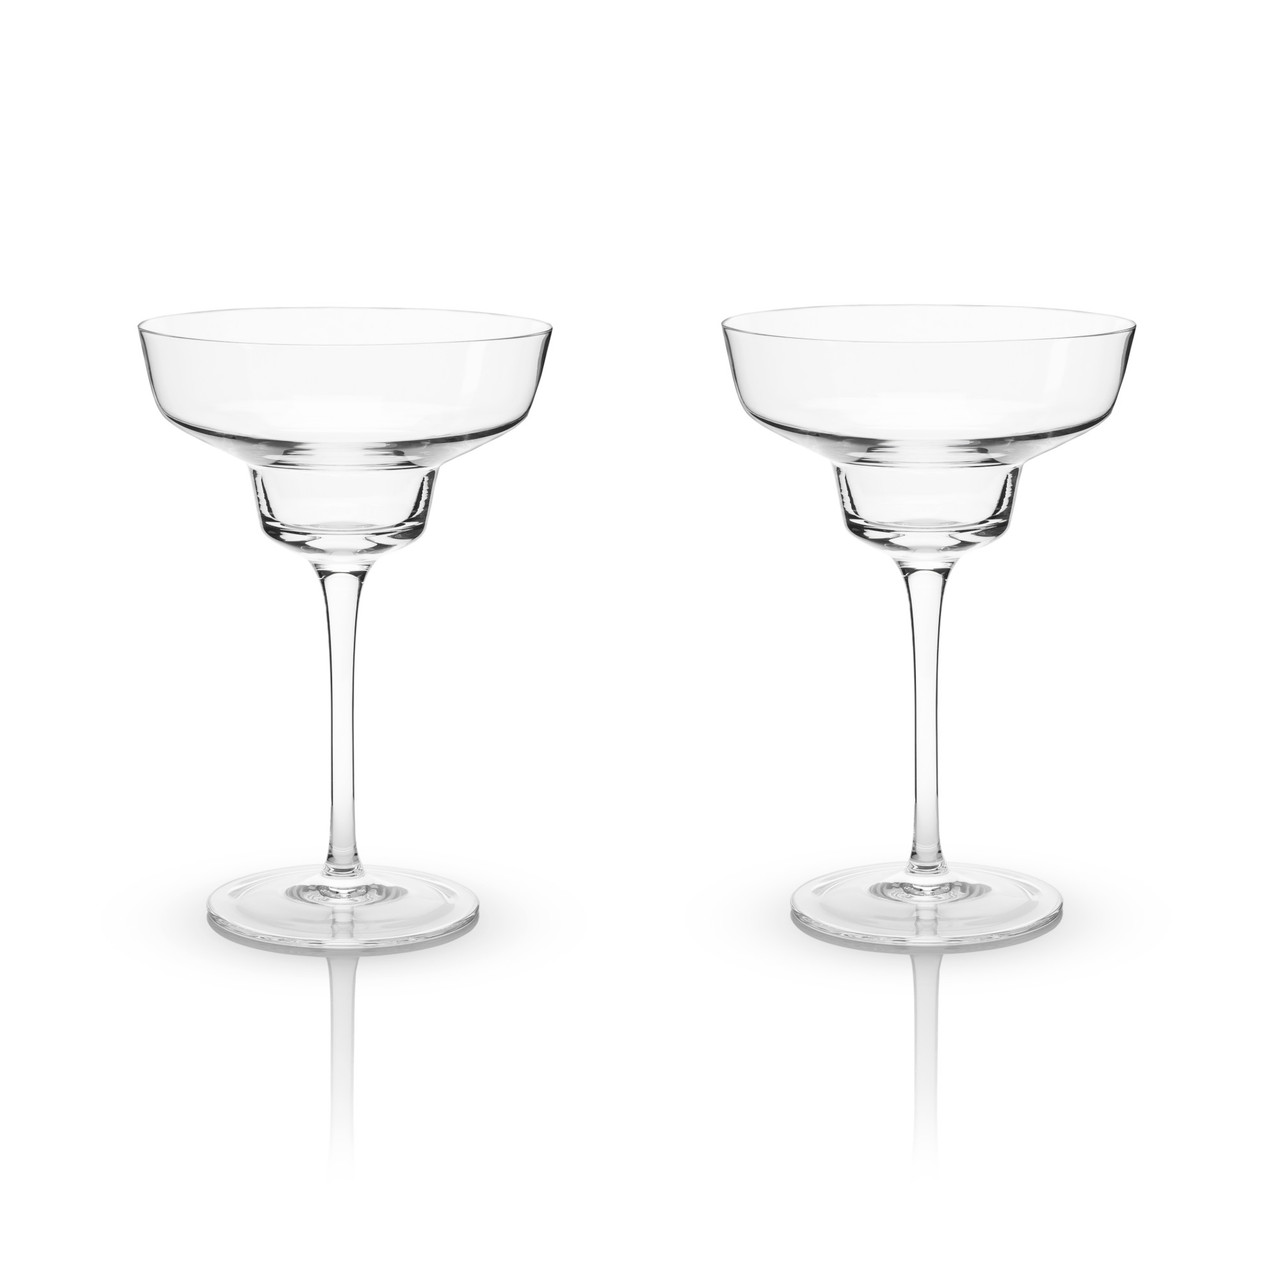 Angled Crystal Margarita Glasses by Viski®